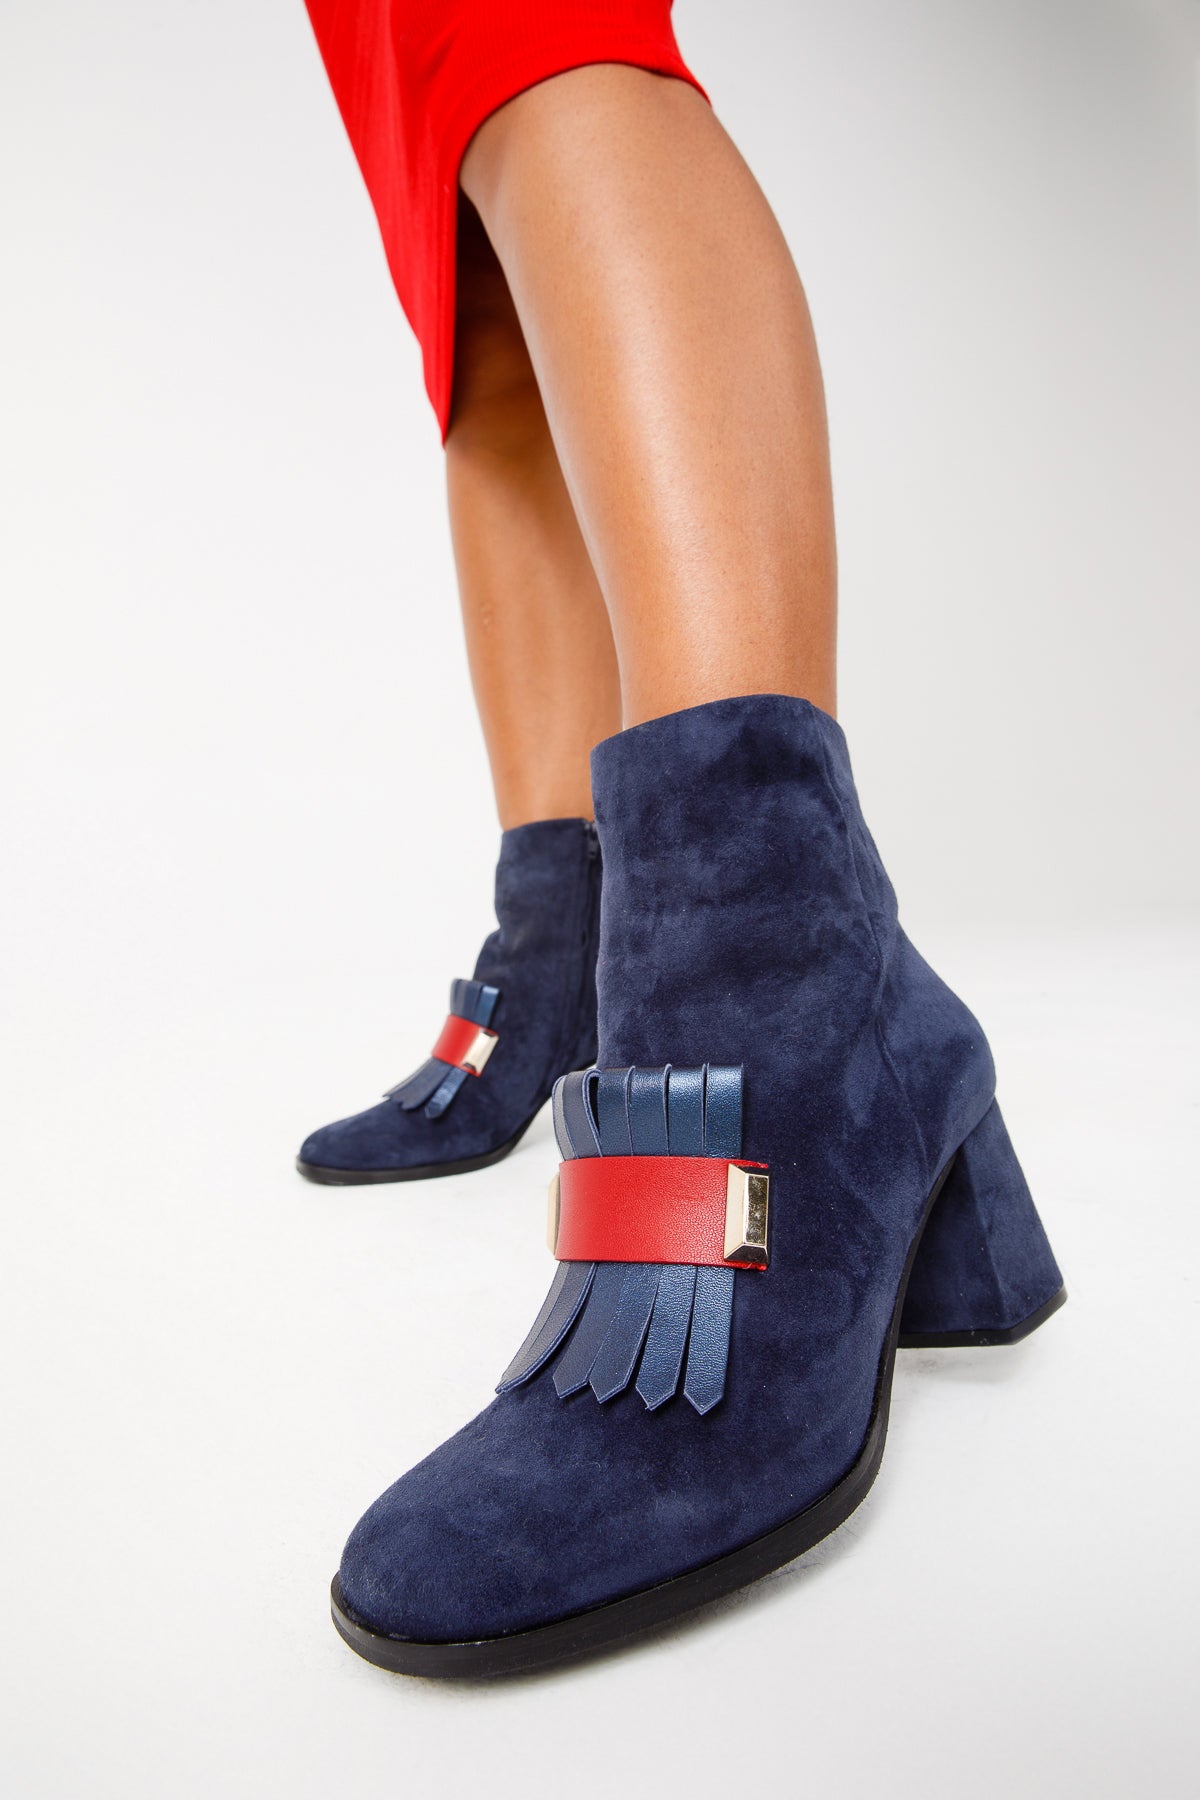 Women's Navy Blue Leather Suede Ankle Boot Low Heel Chelsea UK Size 3 - 8 |  eBay